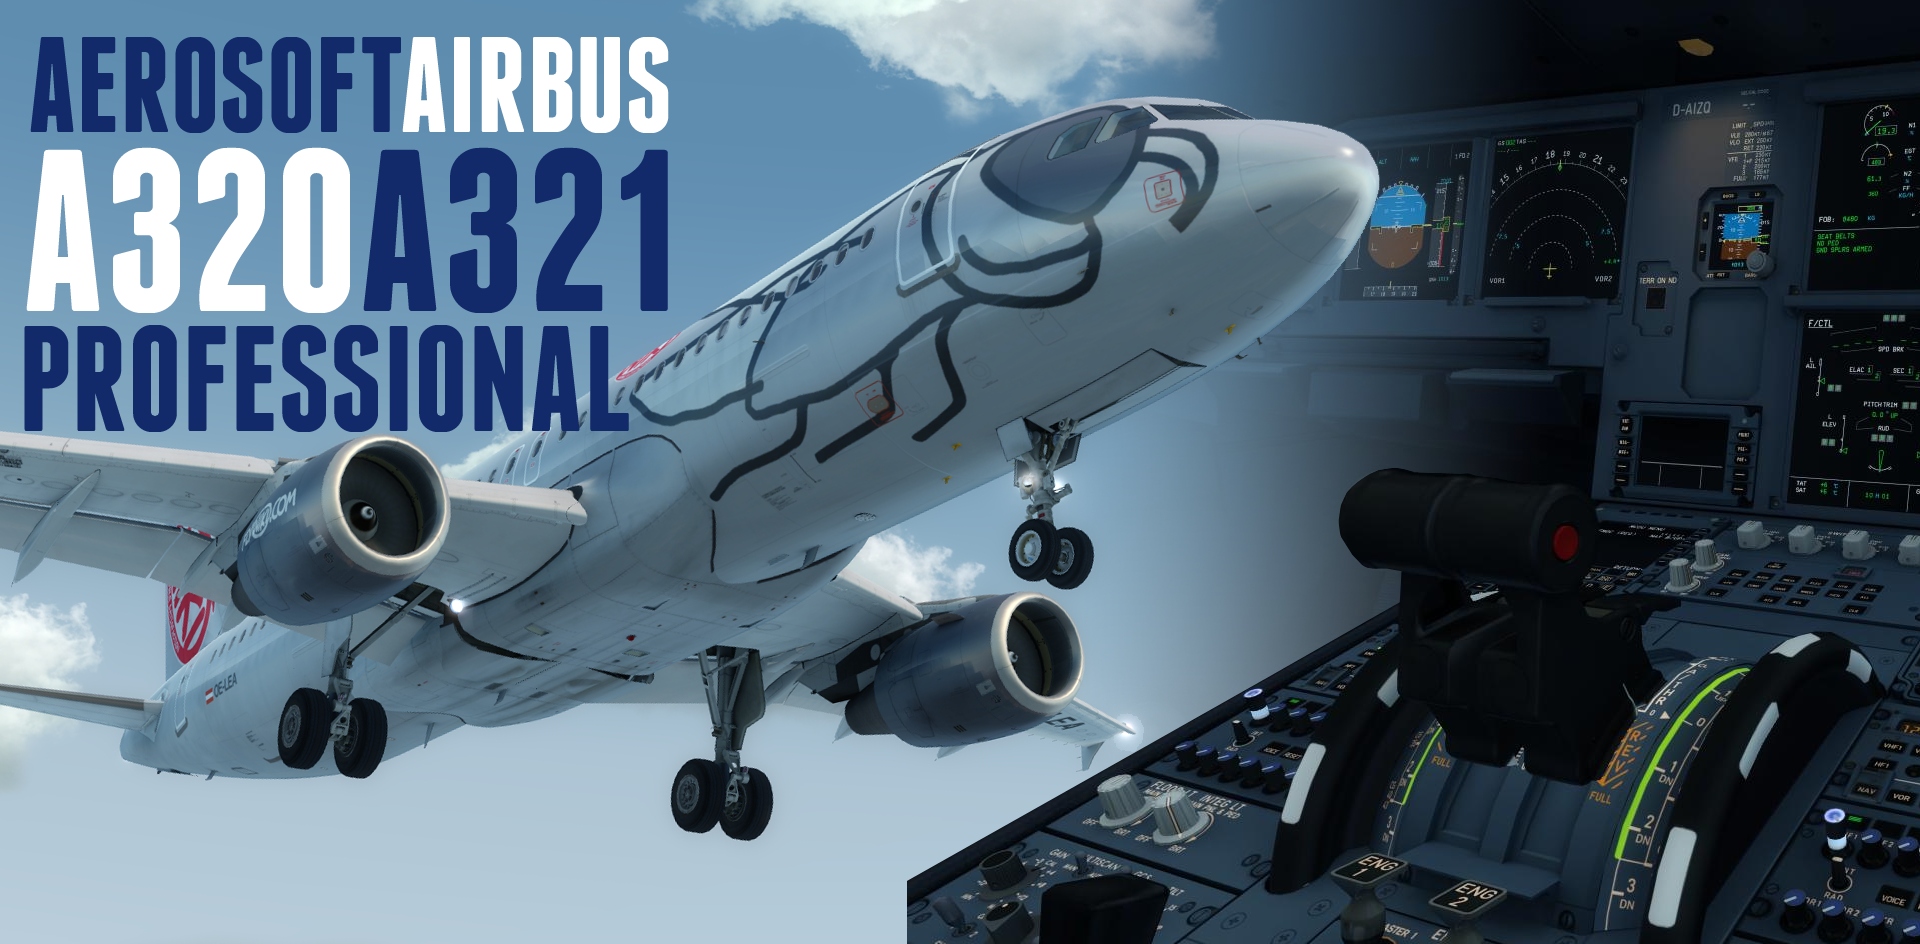 Aerosoft Airbus A320/A321 Professional Review